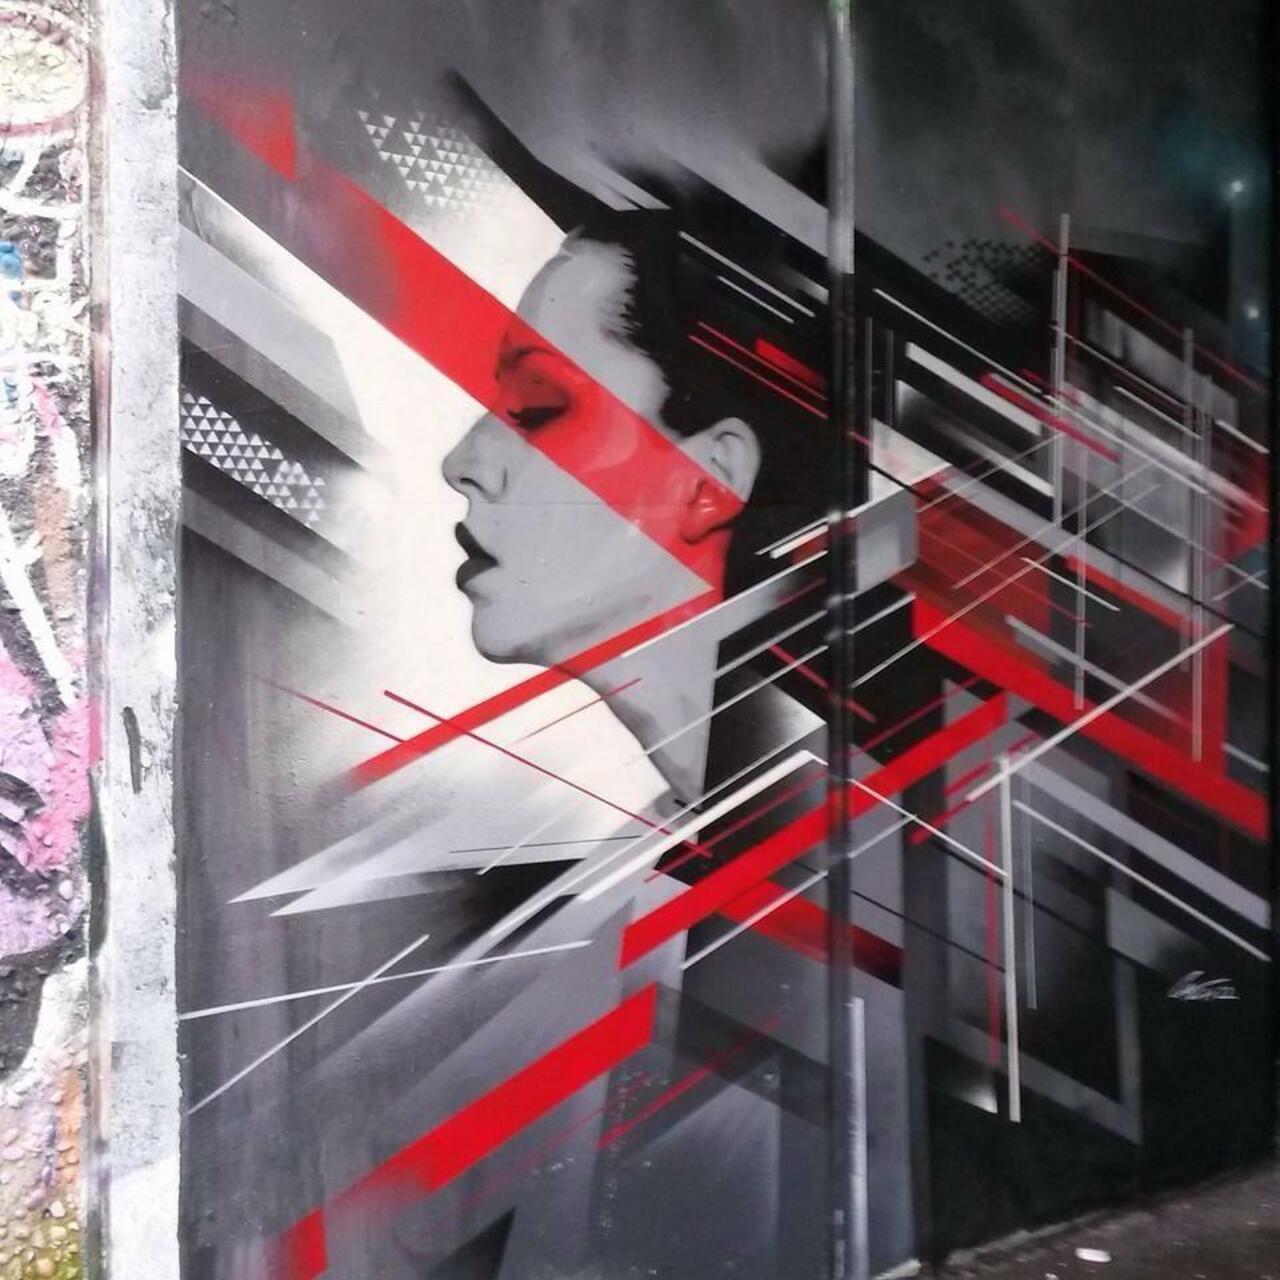 RT @designopinion: Artist Catch-22 new Street Art wall in Tamworth, Staffordshire, England #art #mural #graffiti #streetart http://t.co/htKoCXee0O